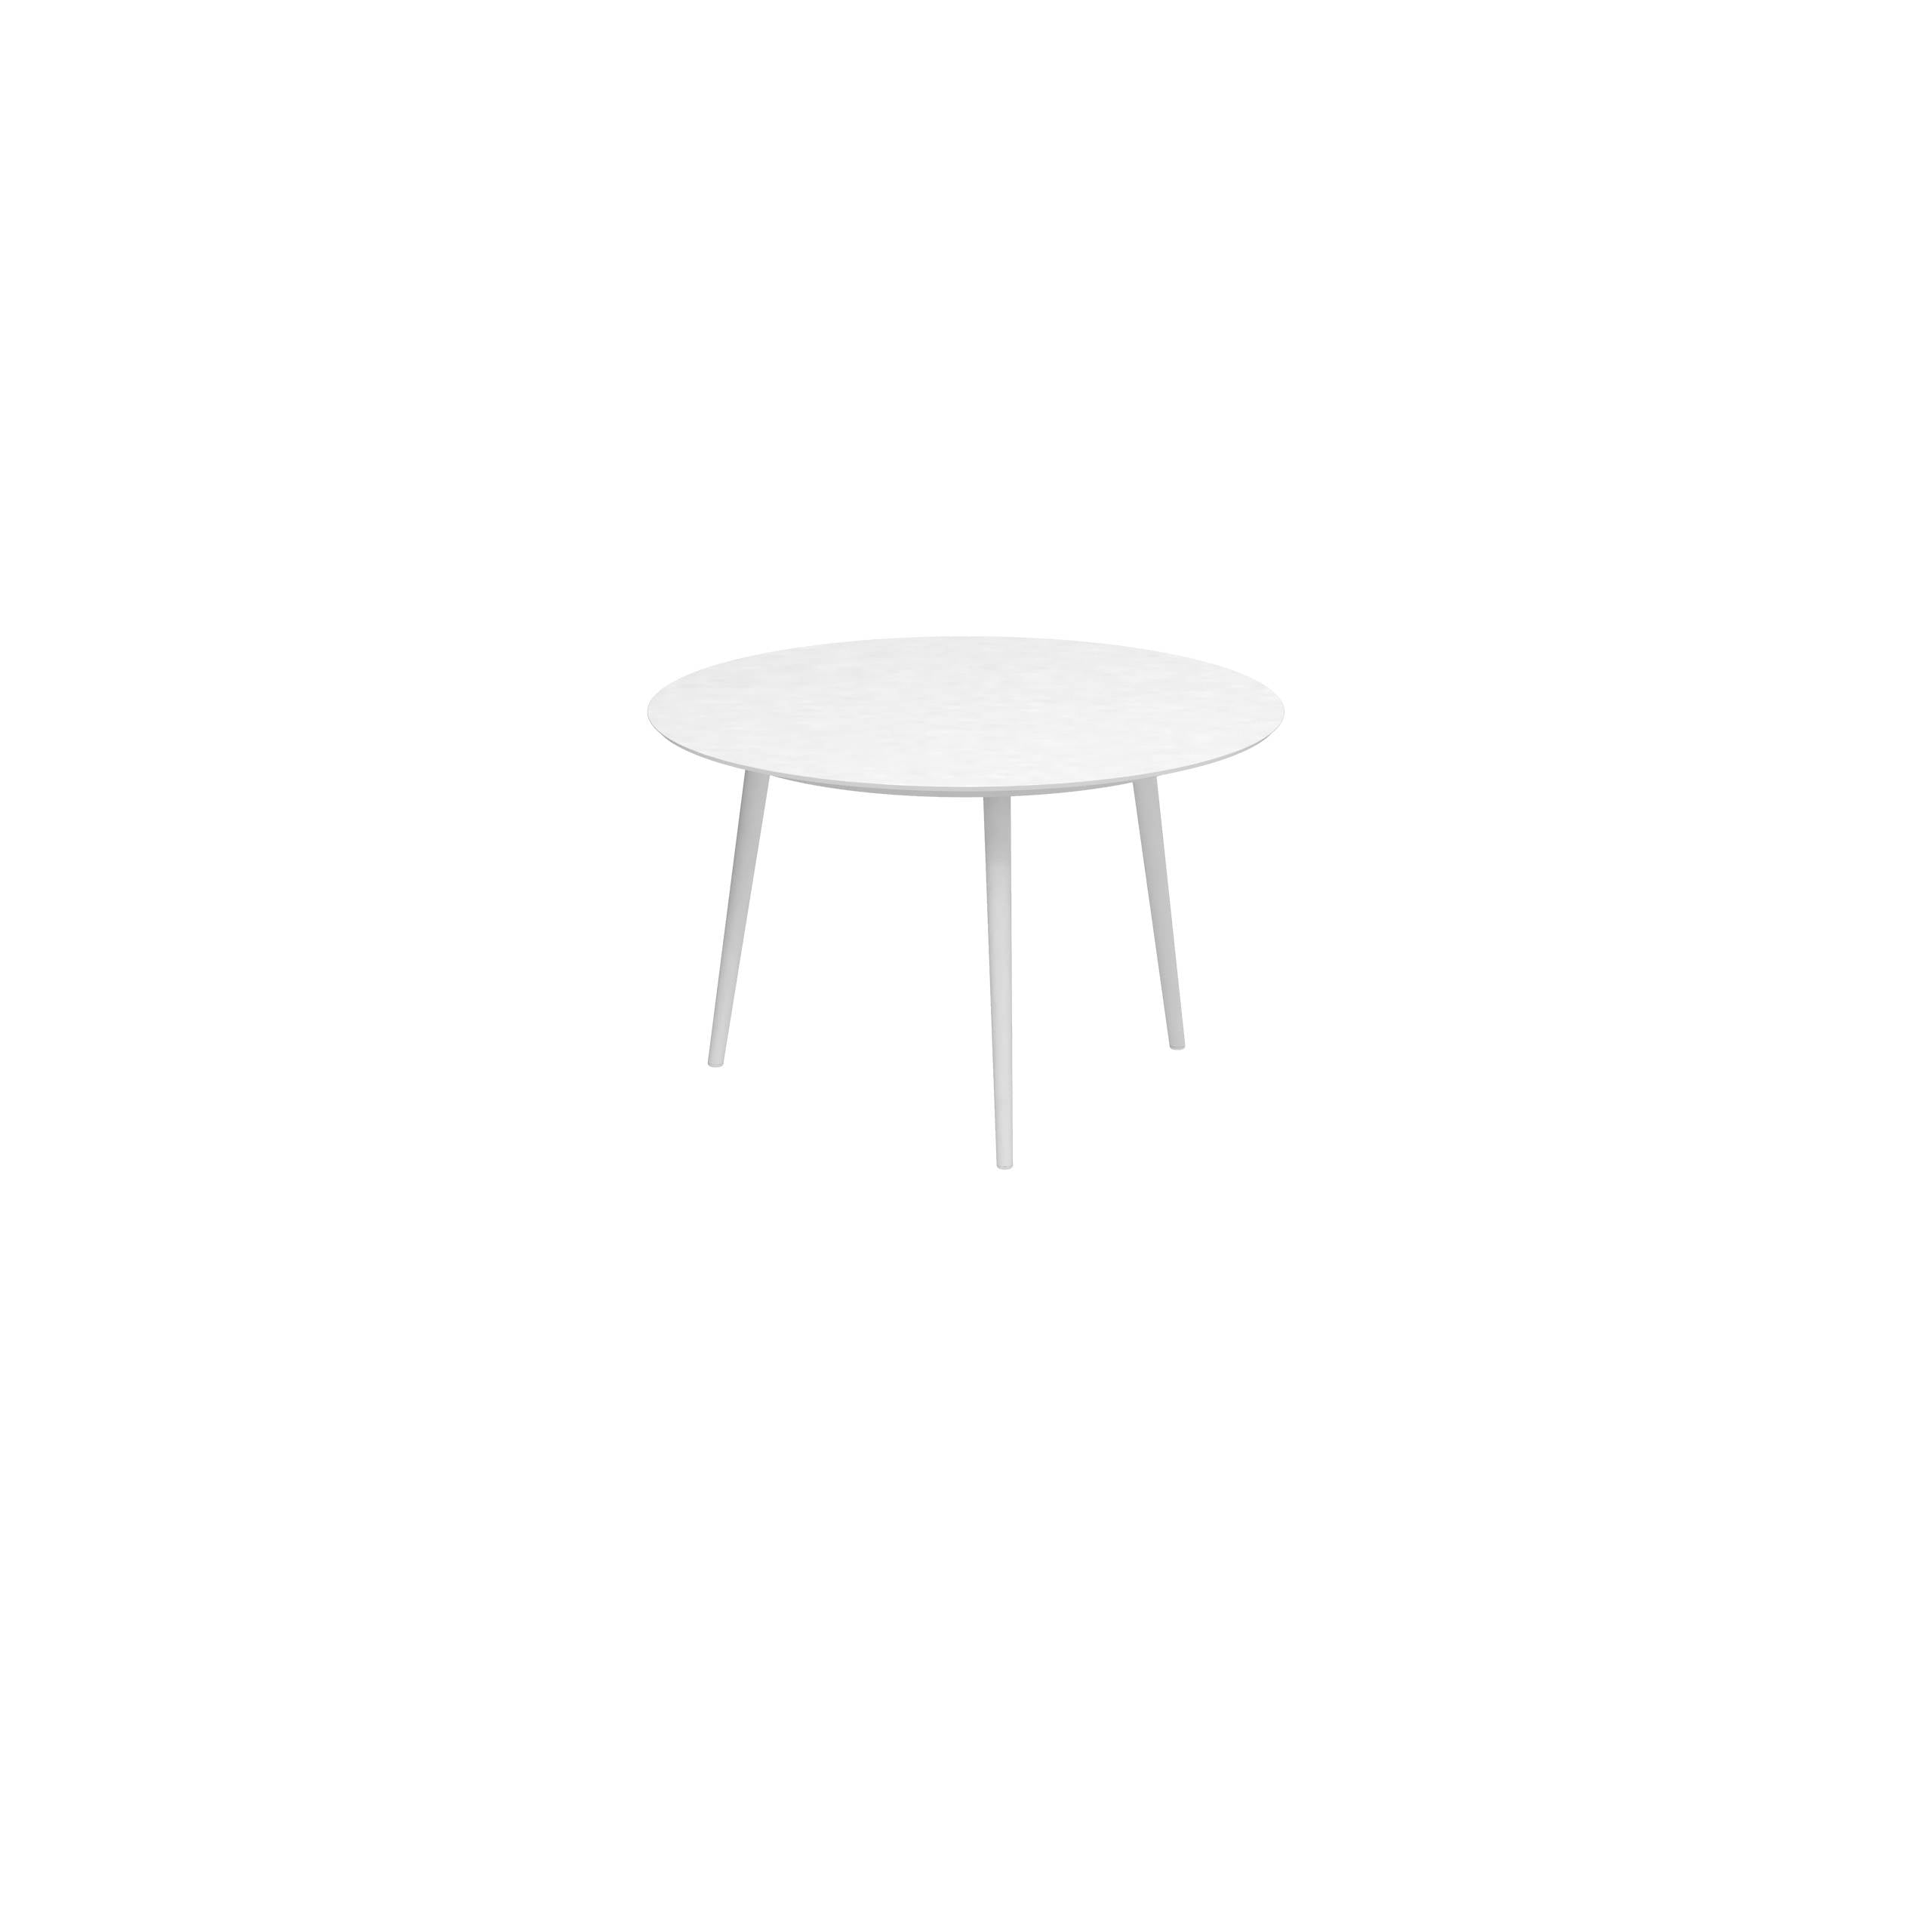 Styletto Standard Dining Table Ø 120cm Alu Legs White Ceramic Top White